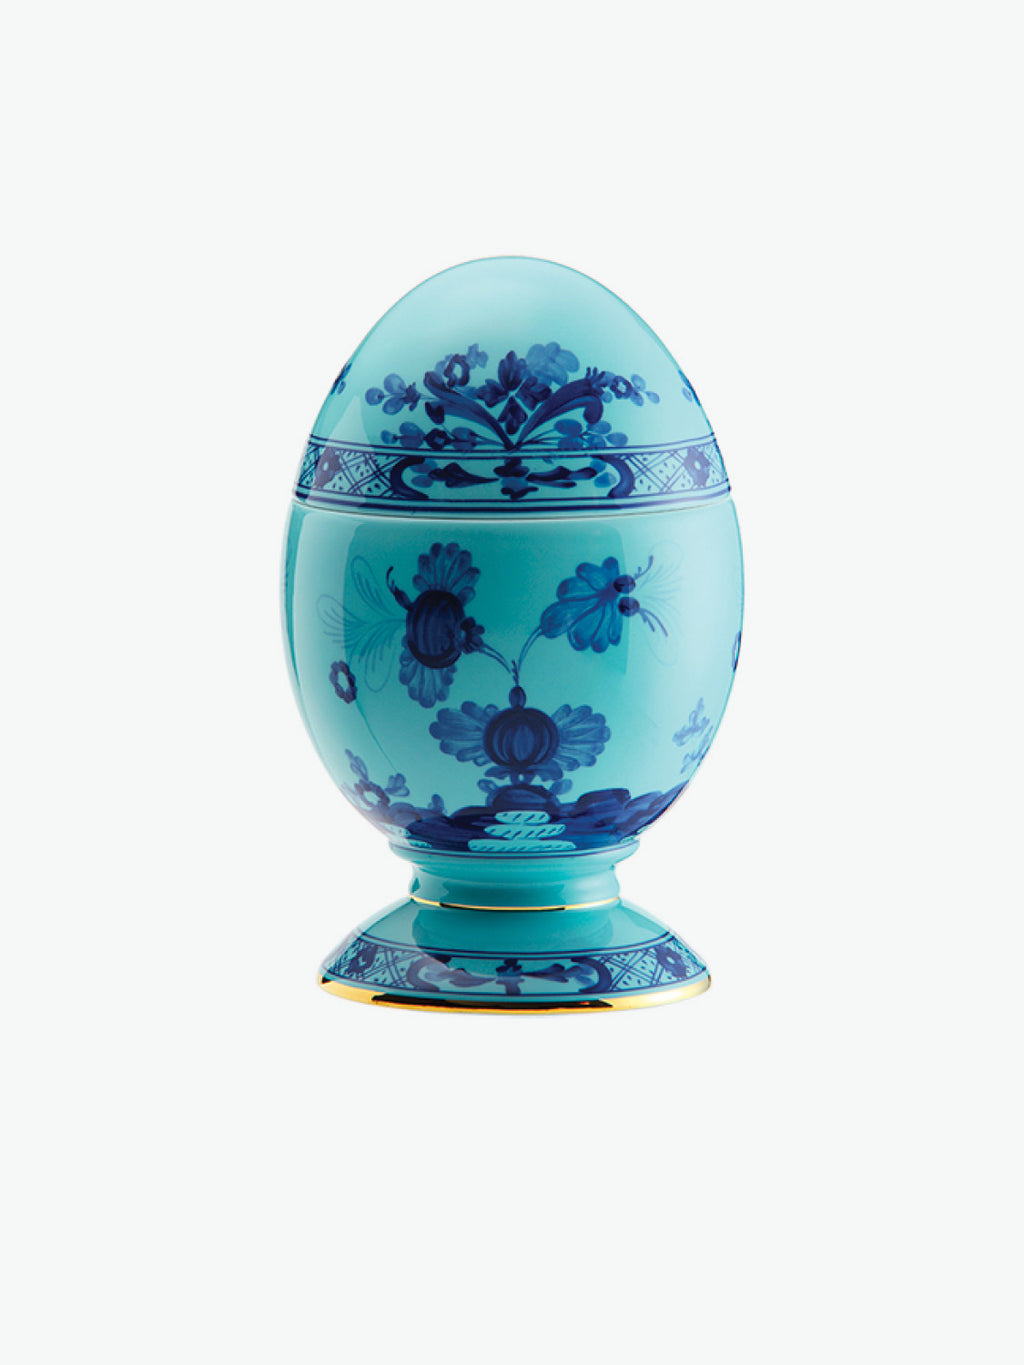 Ginori 1735 Large Egg Oriente Italiano Iris